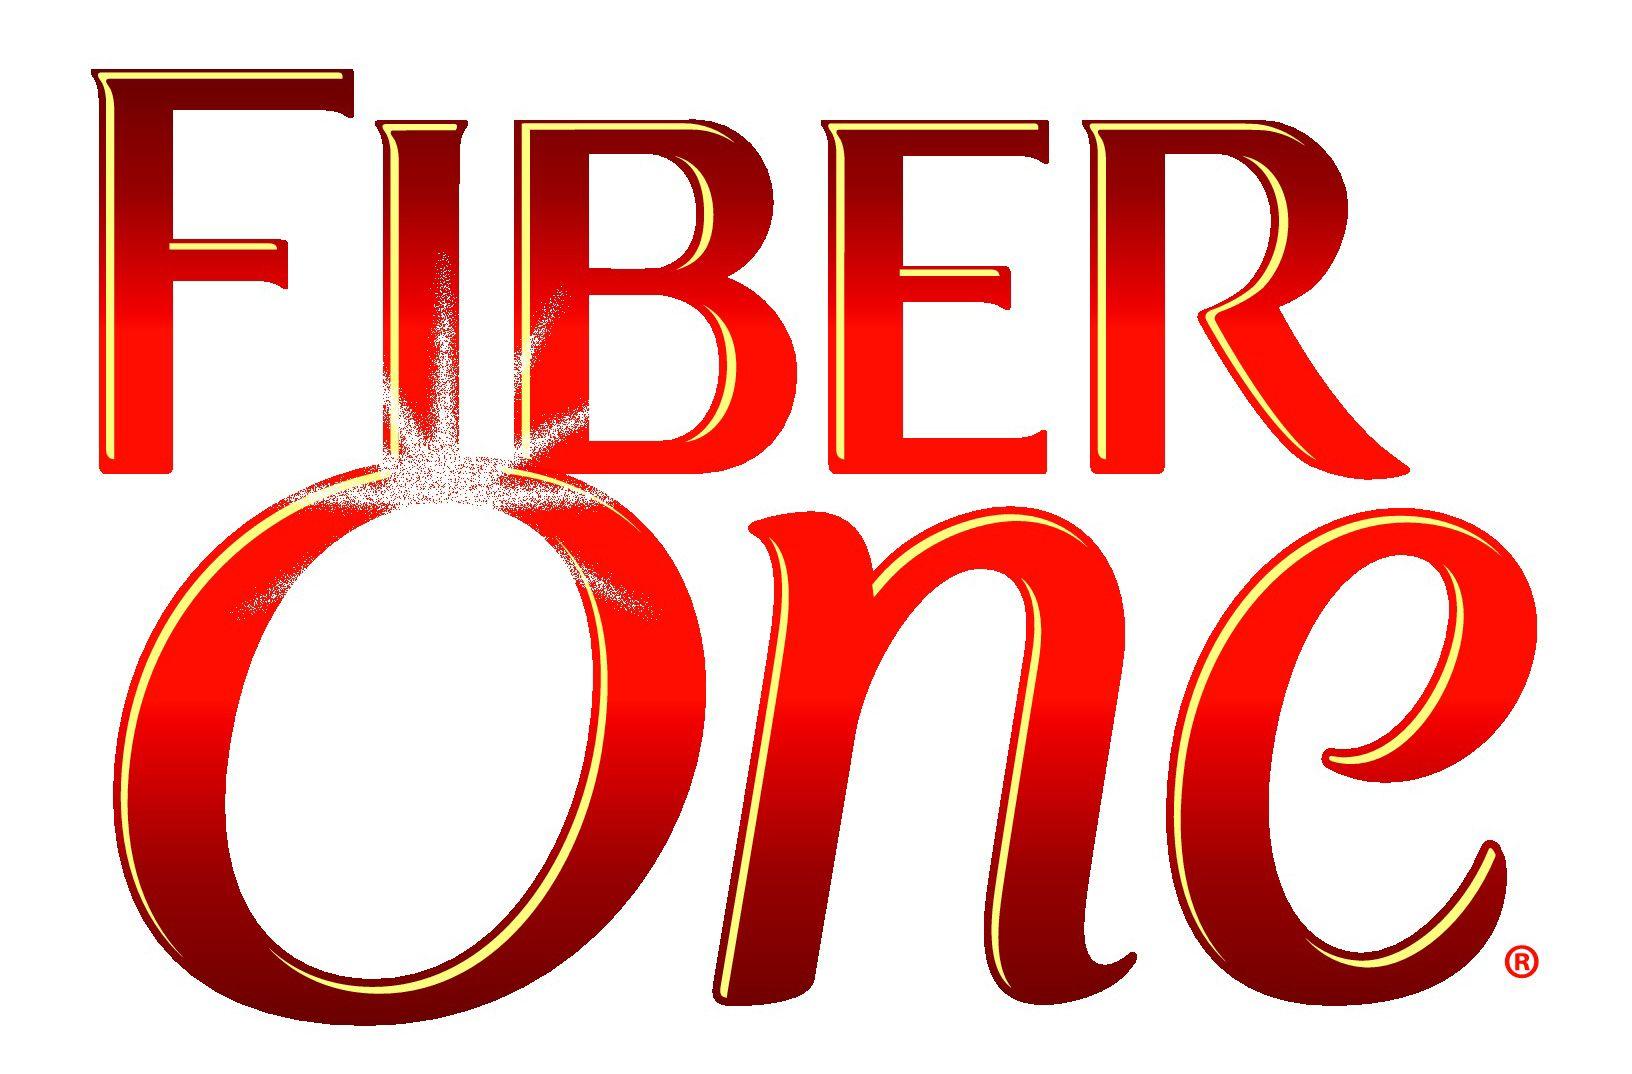 Fiber One Logo - Image - Fiber One logo.jpg | Logopedia | FANDOM powered by Wikia